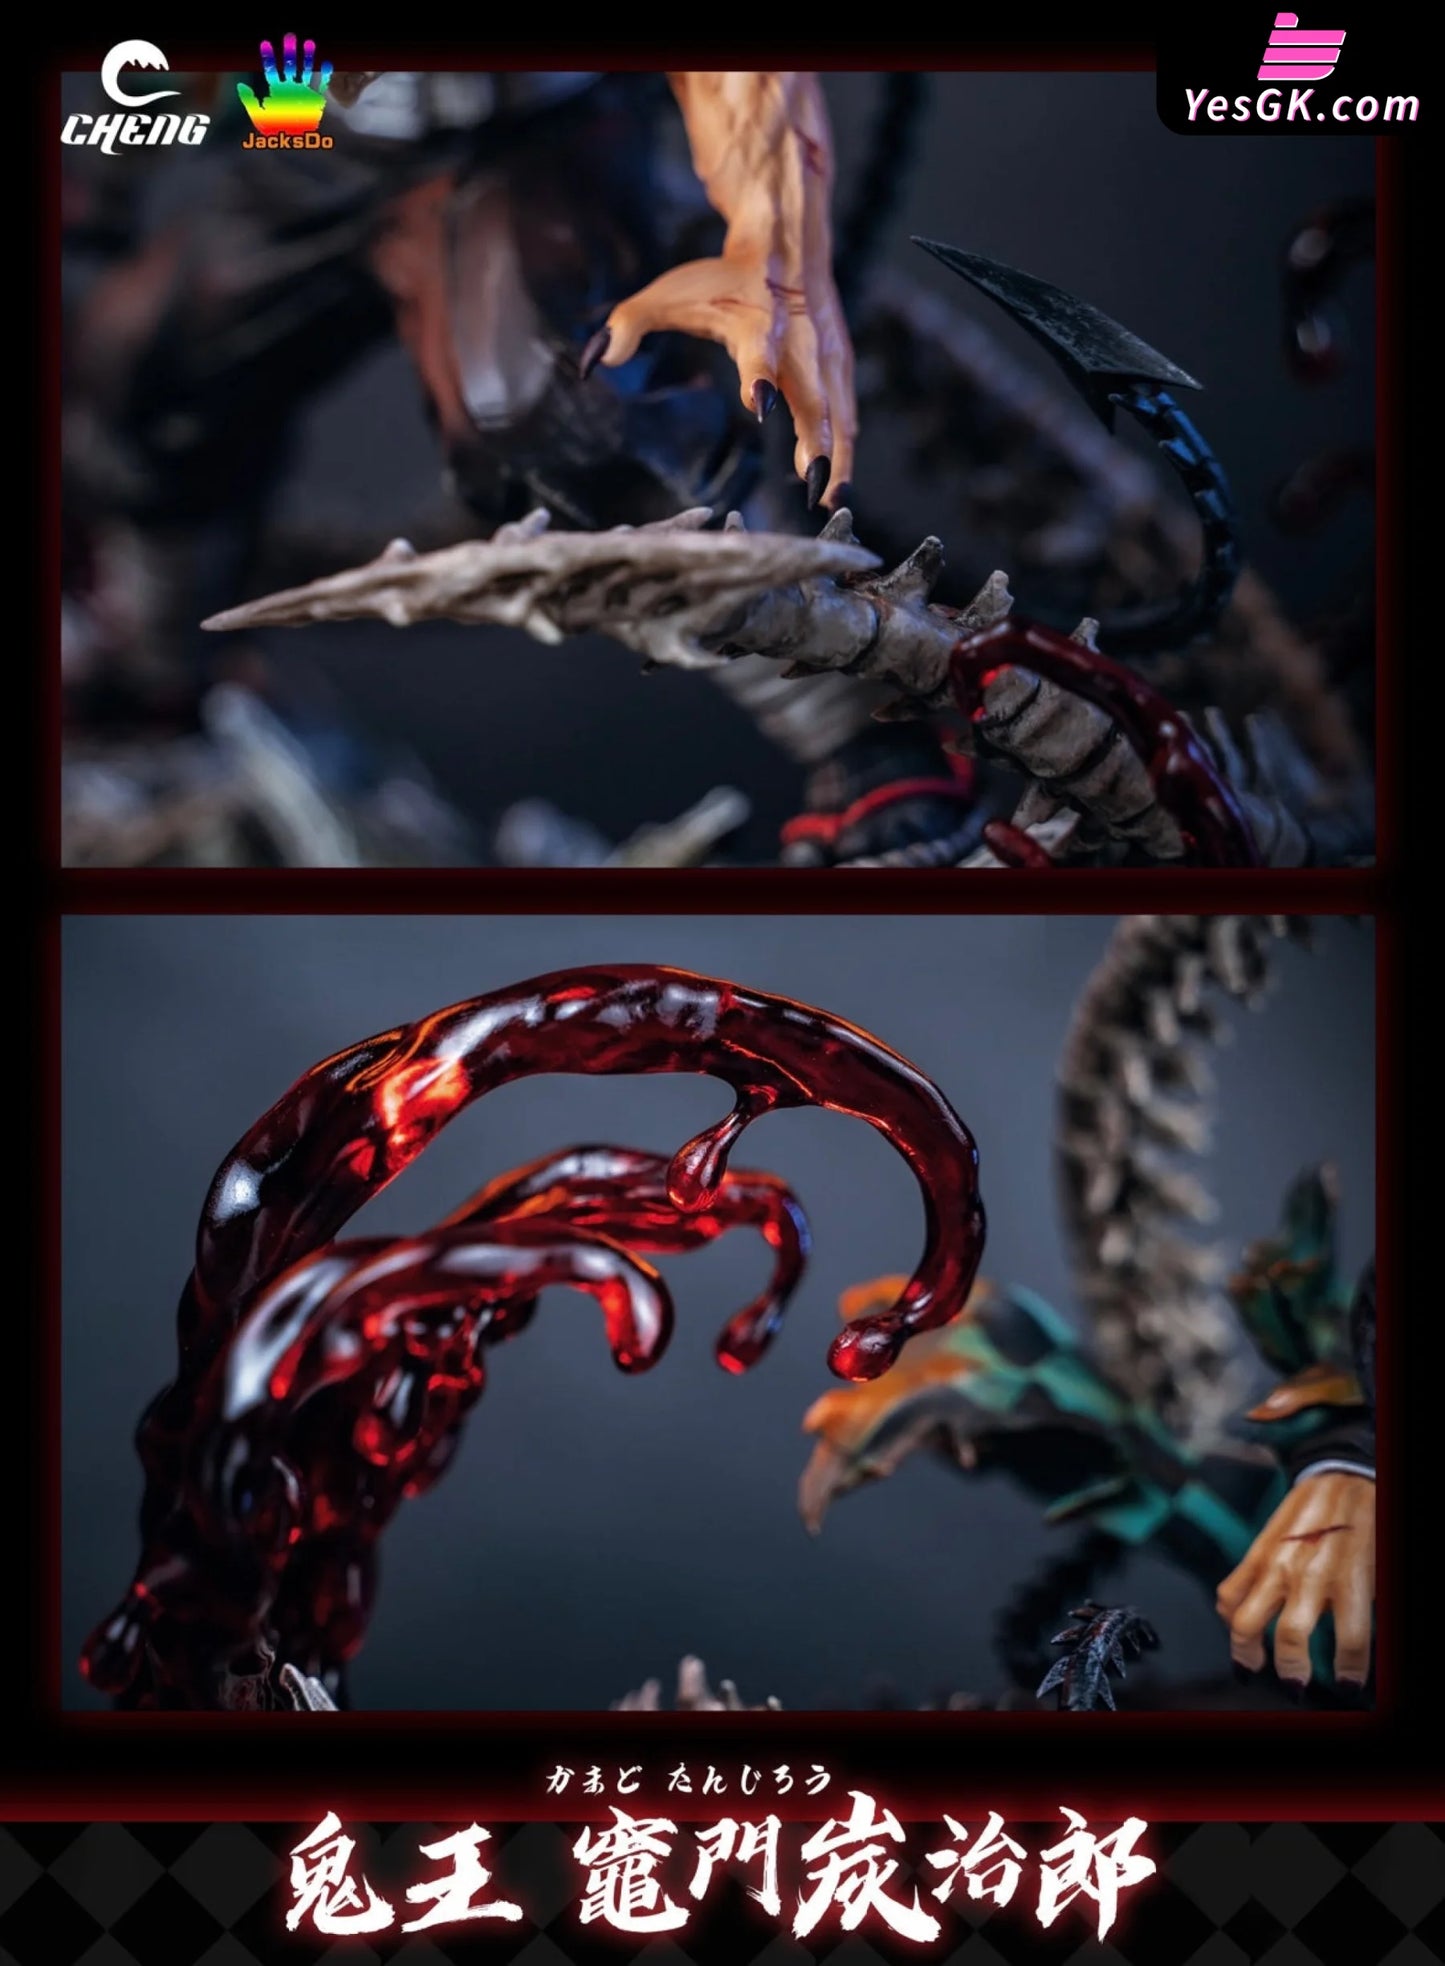 Demon Slayer Demonized Tanjiro Resin Statue - Cheng X Jacksdo Studio [Pre-Order Closed]